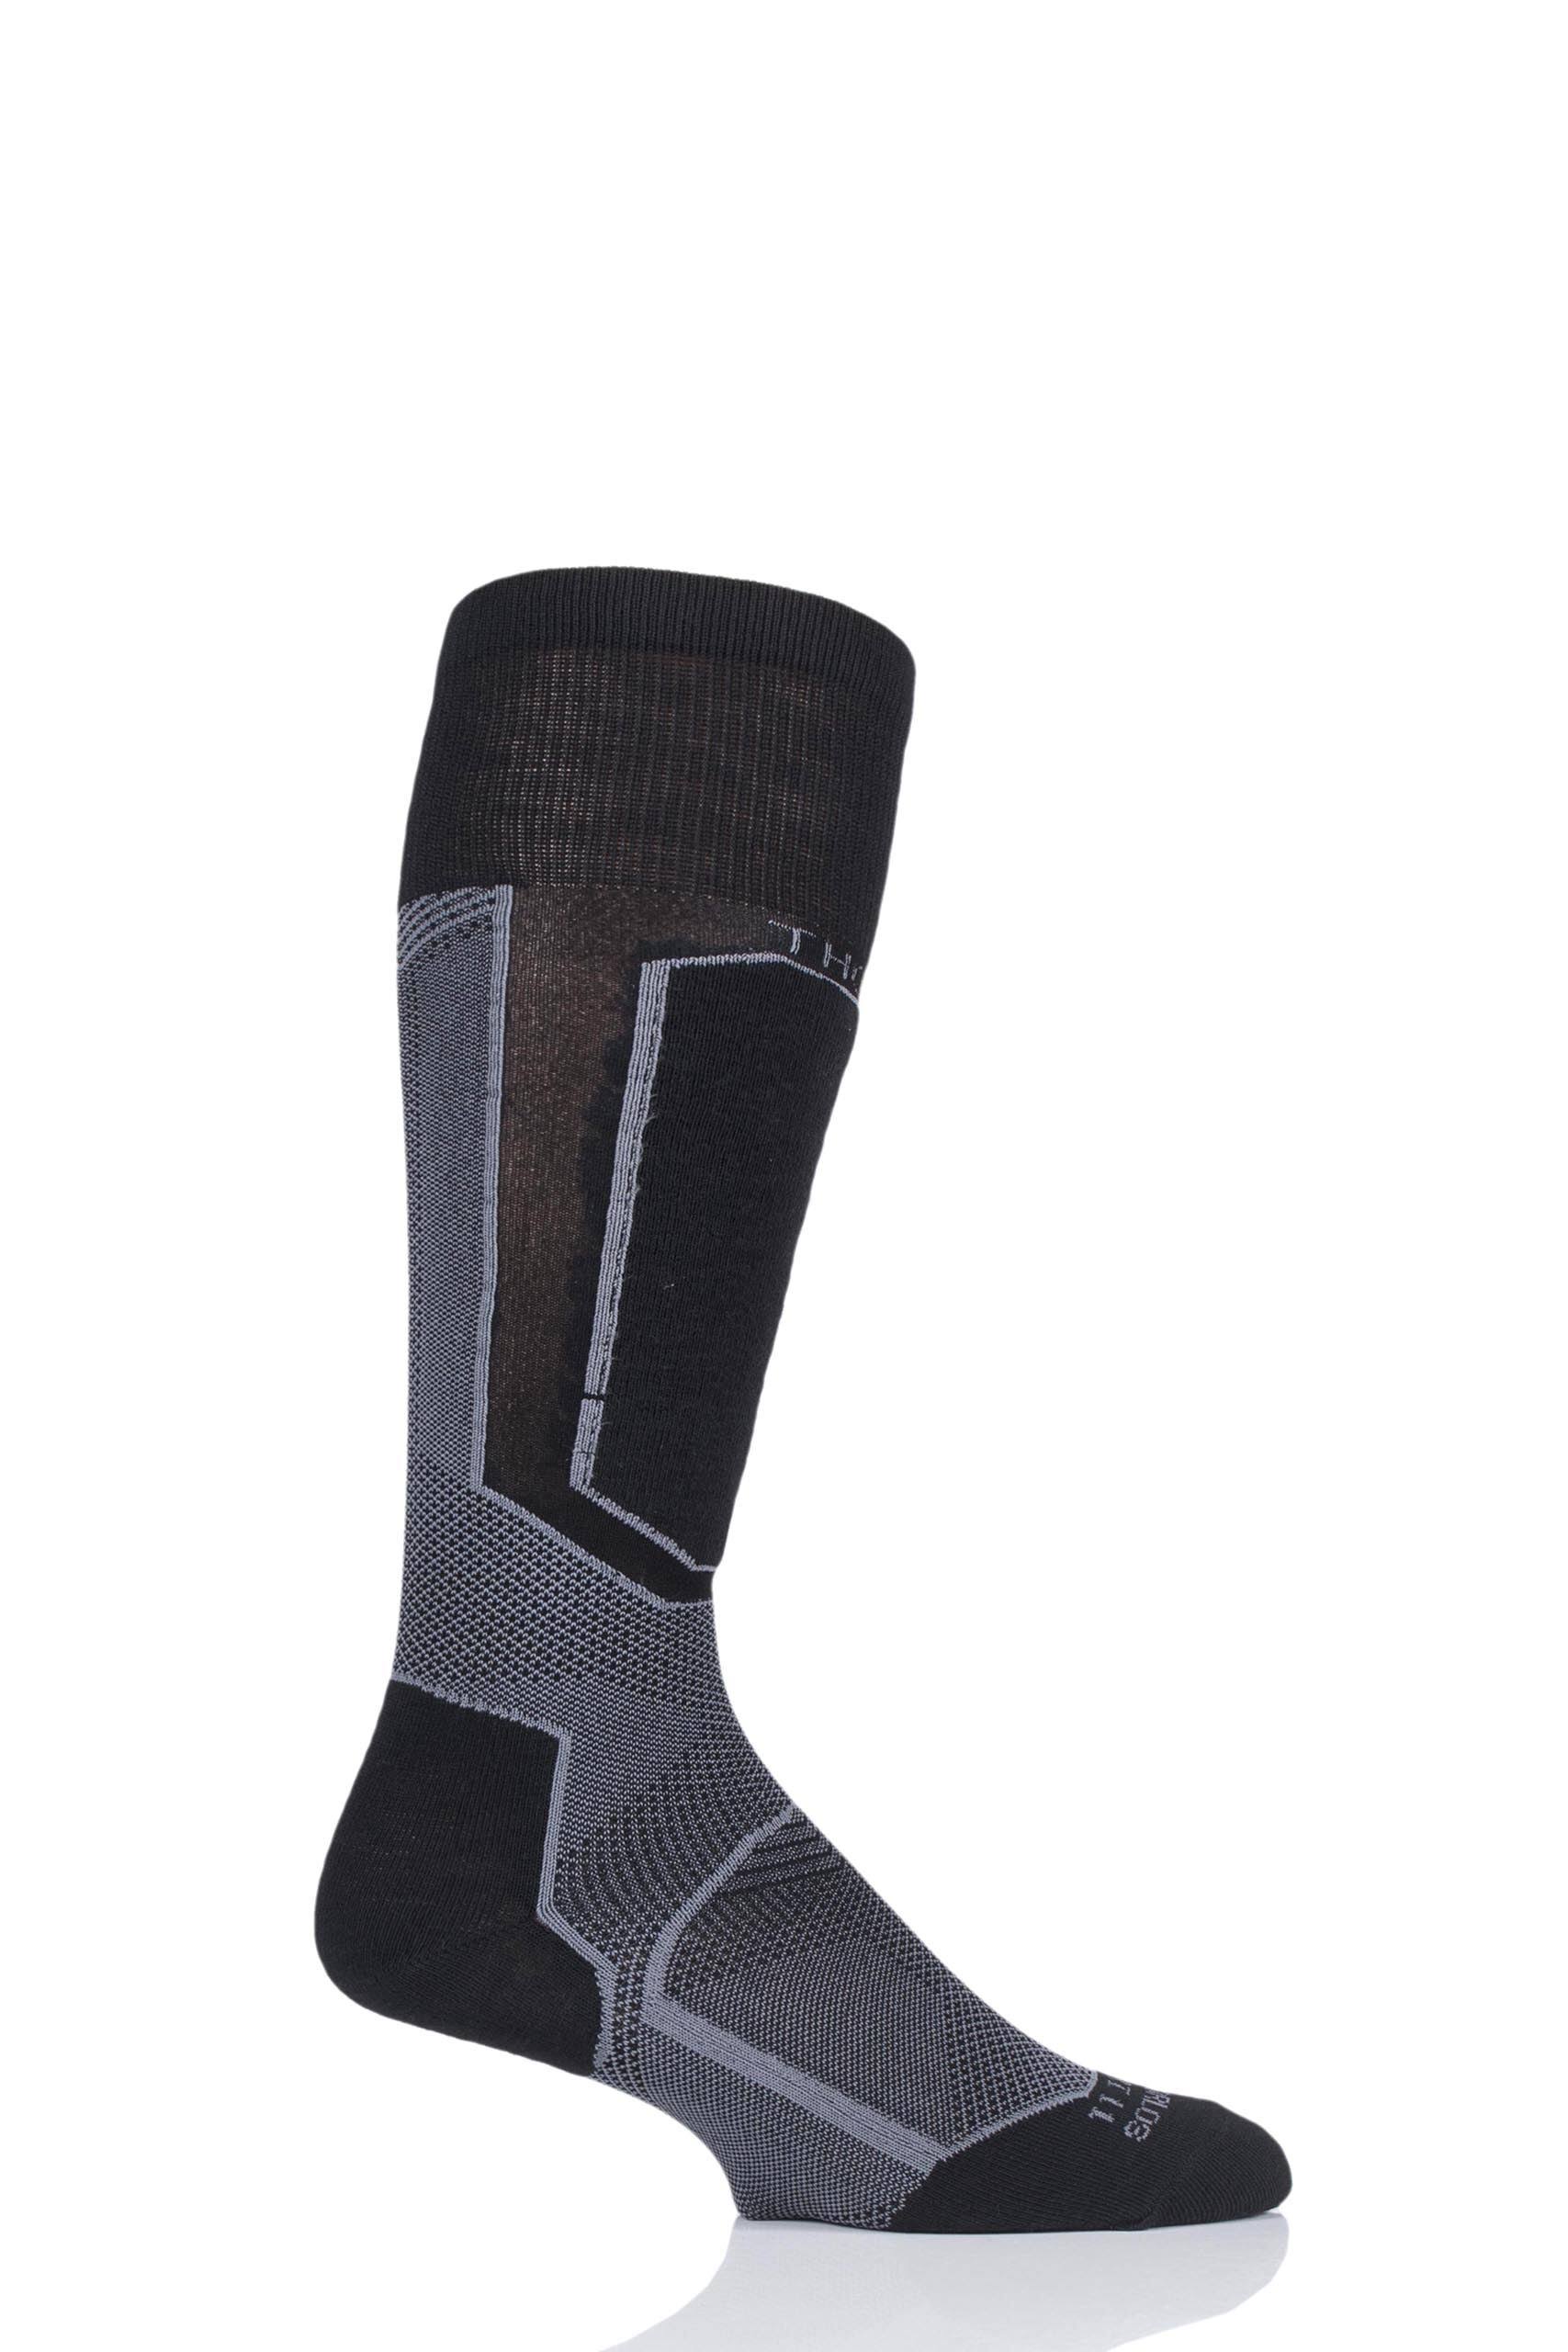 Thorlo Extreme Ski Socks - SS19 Black UK 5.5-7.5